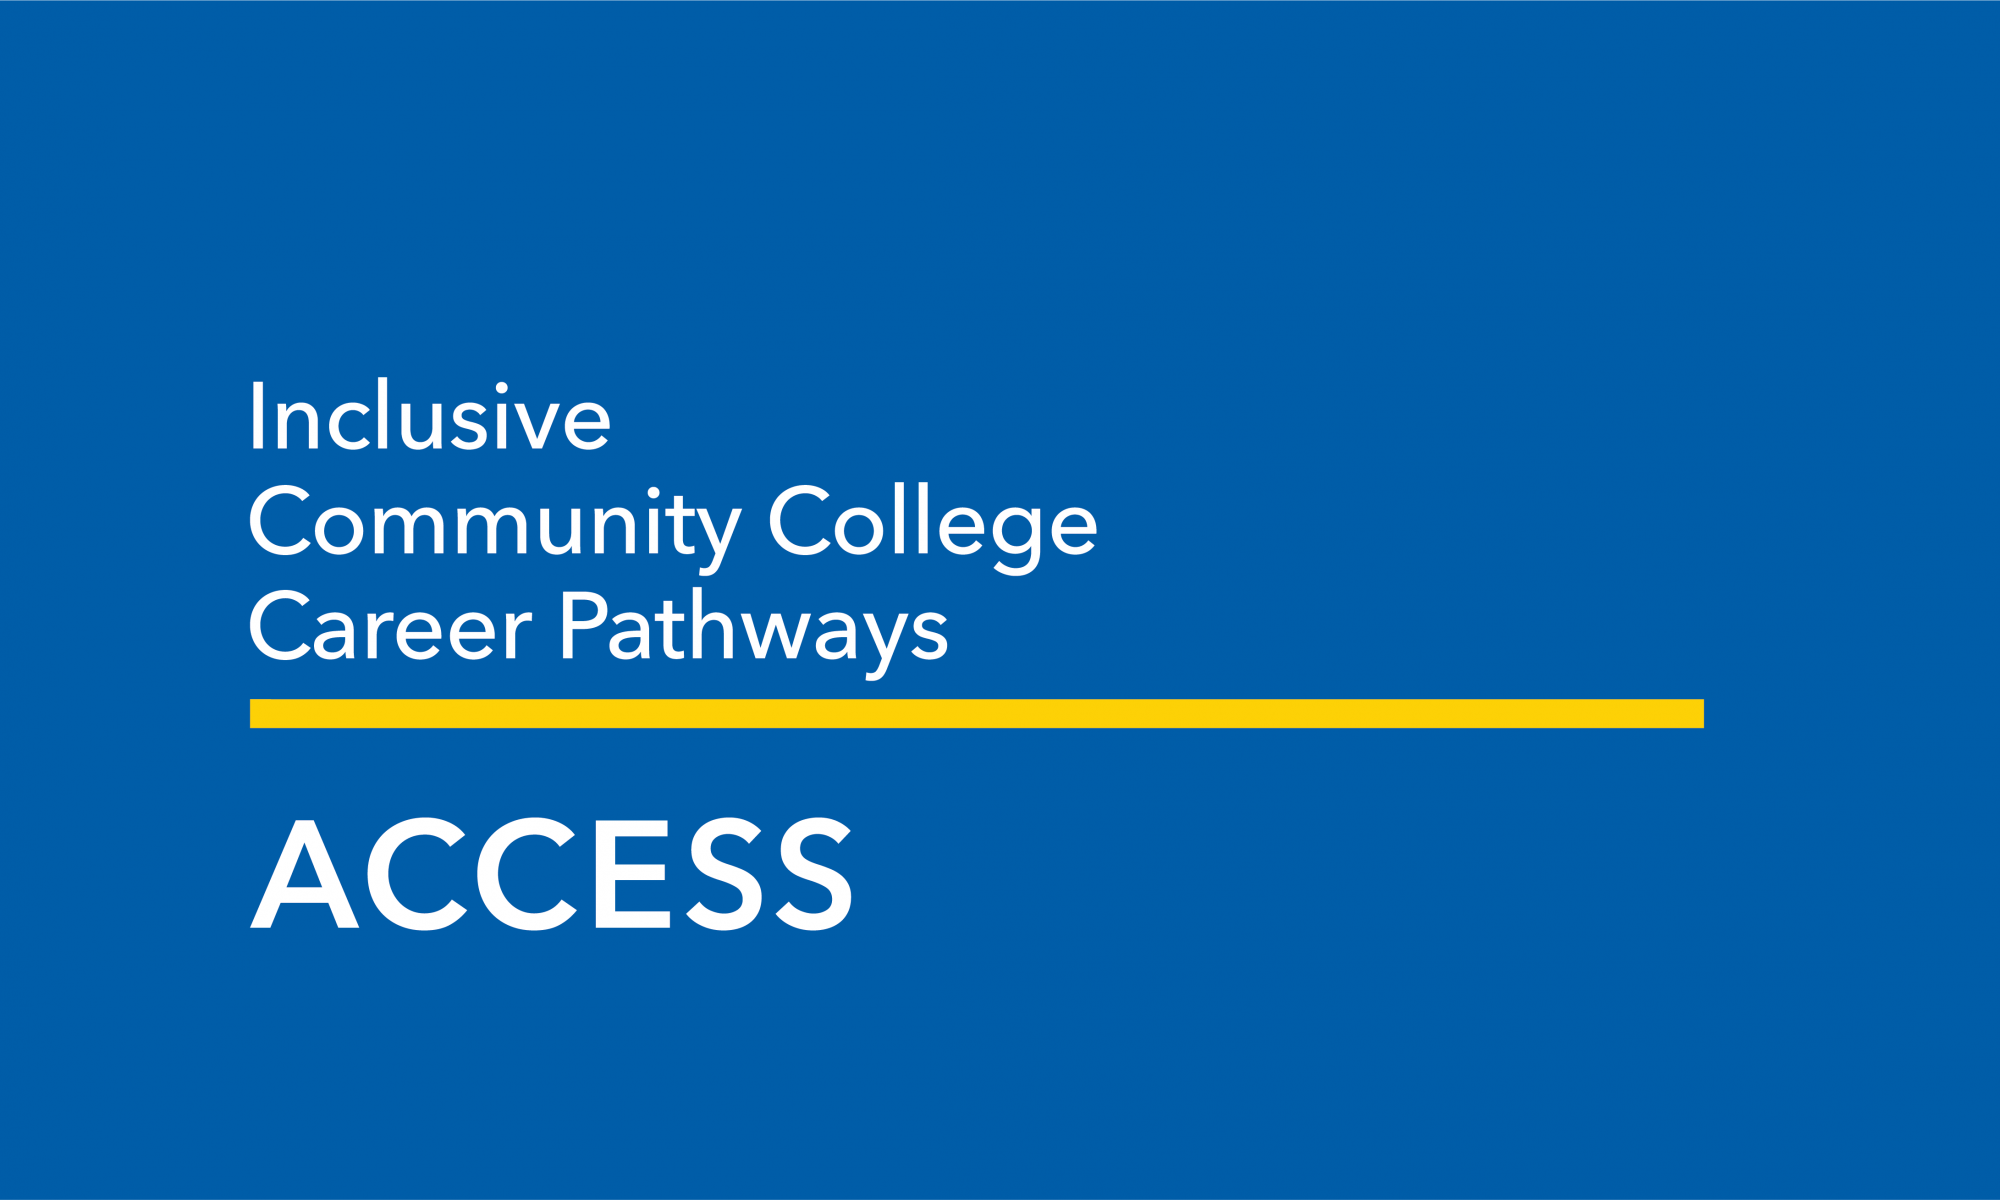 Inclusive Community College Career Pathways: Access